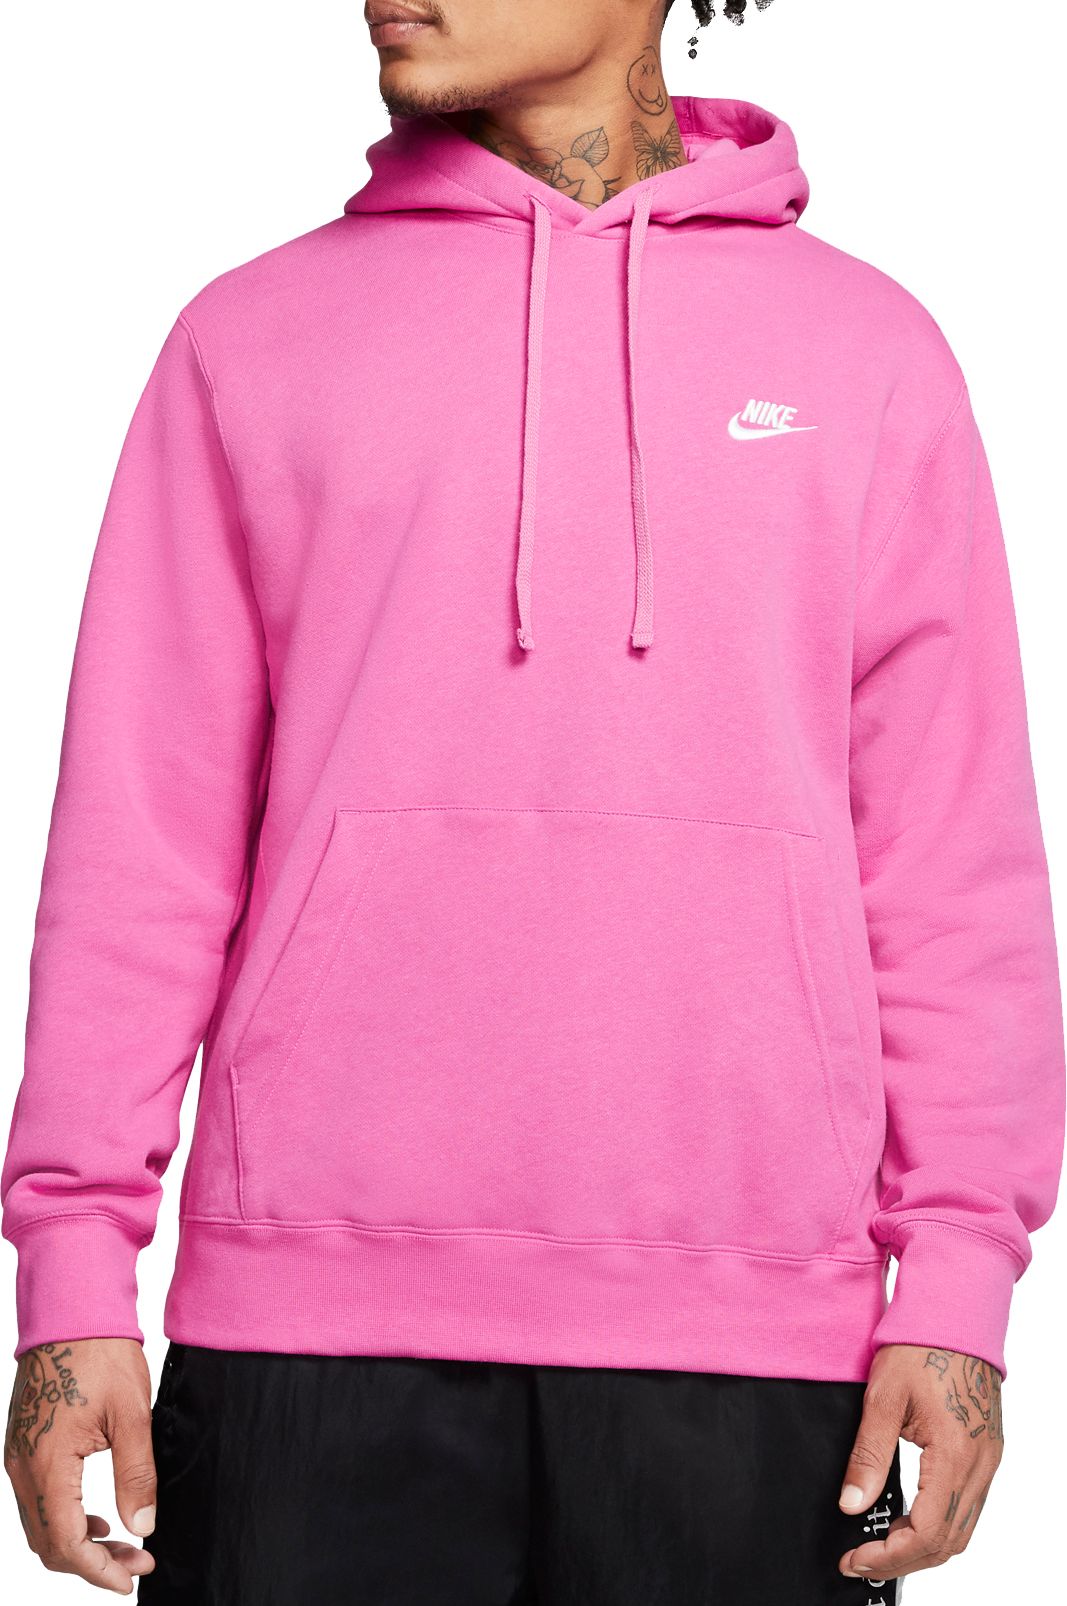 sweatshirt nike pink 